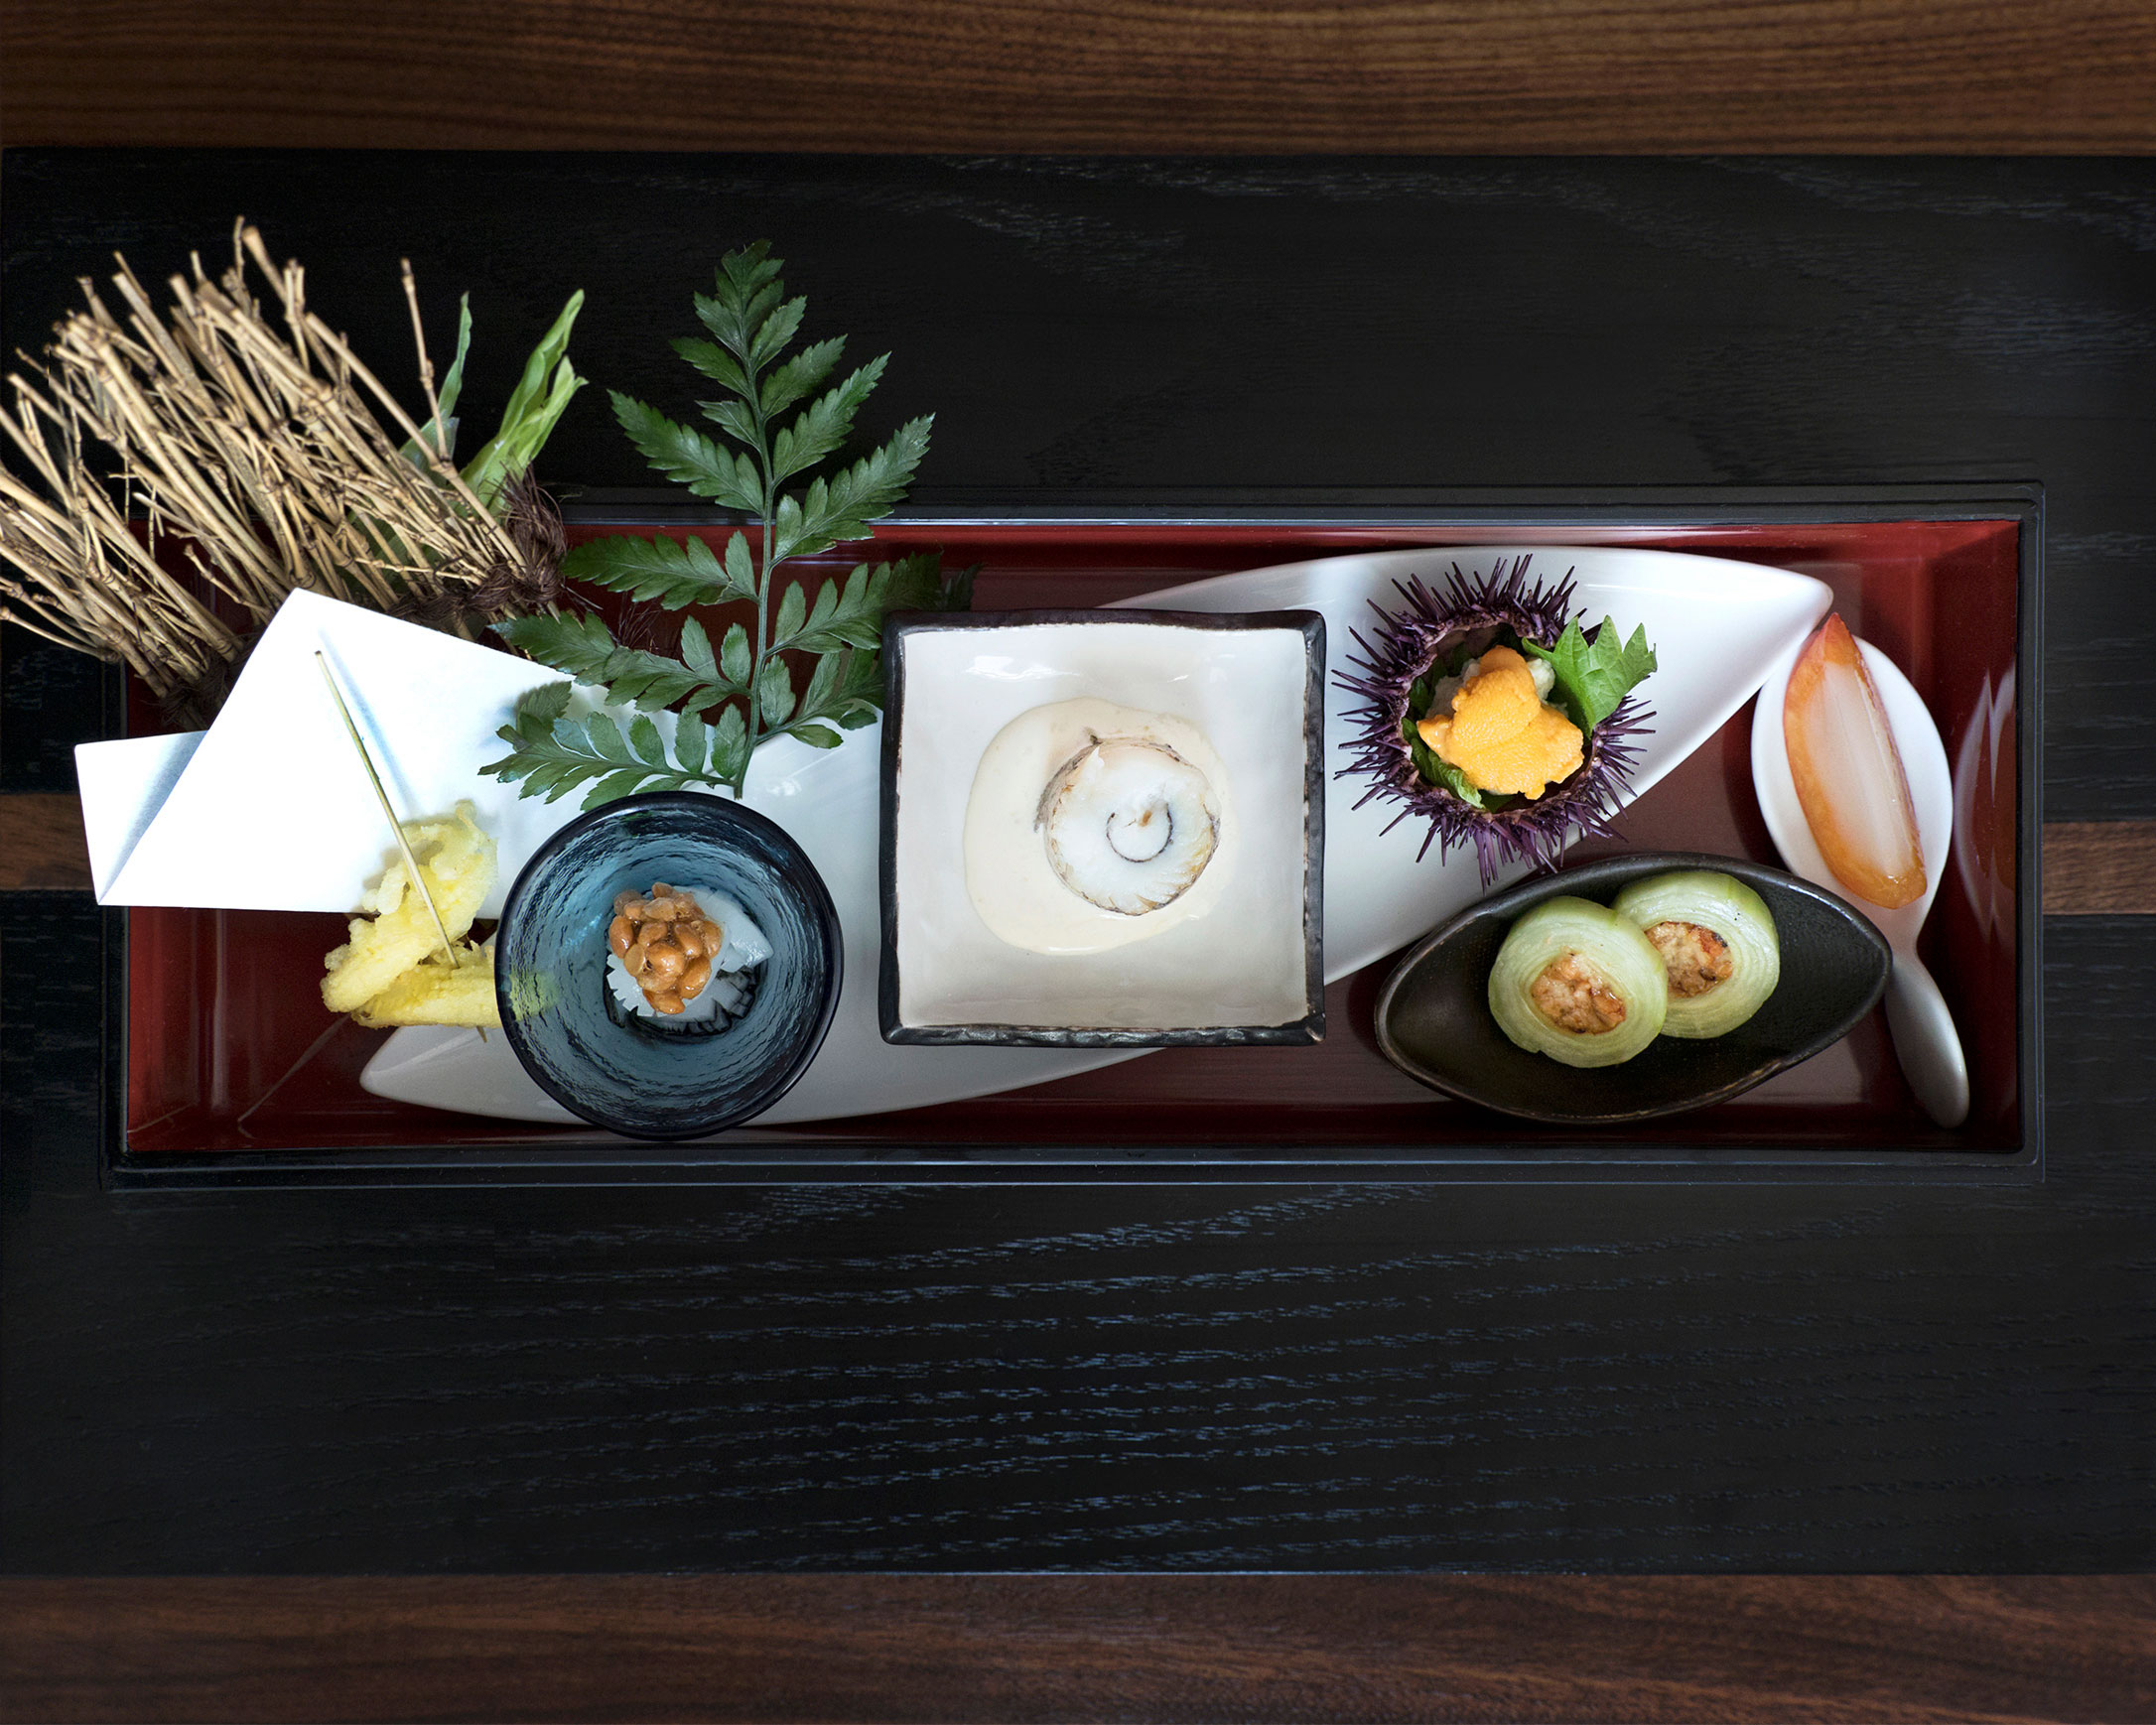 2017 spring zensai box platter with assortment of vegetables, fish, sea urchin, and decorative ceramics